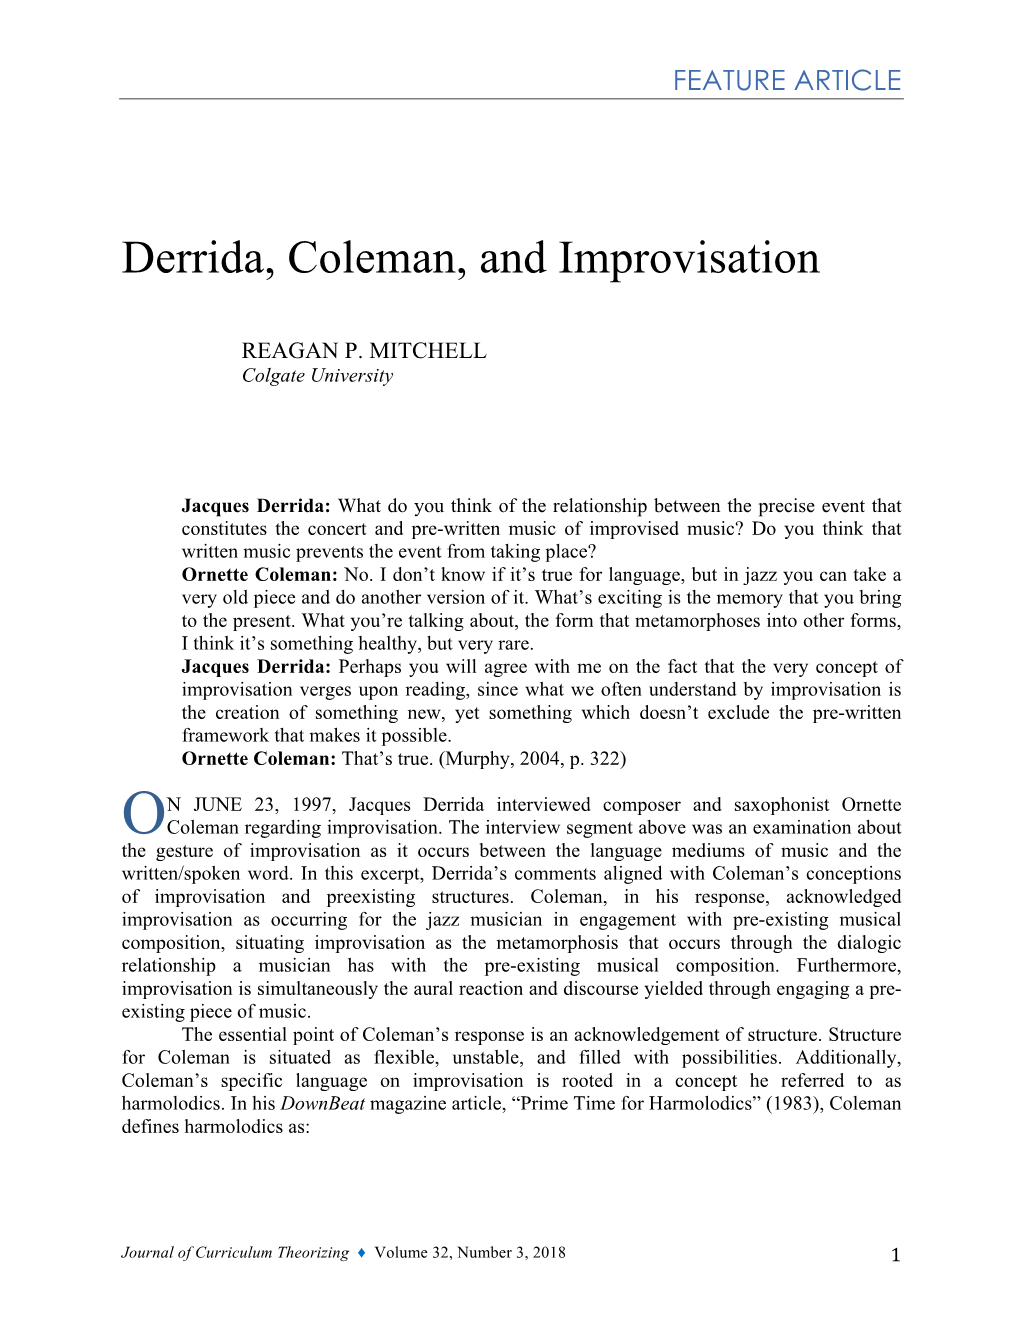 Derrida, Coleman, and Improvisation